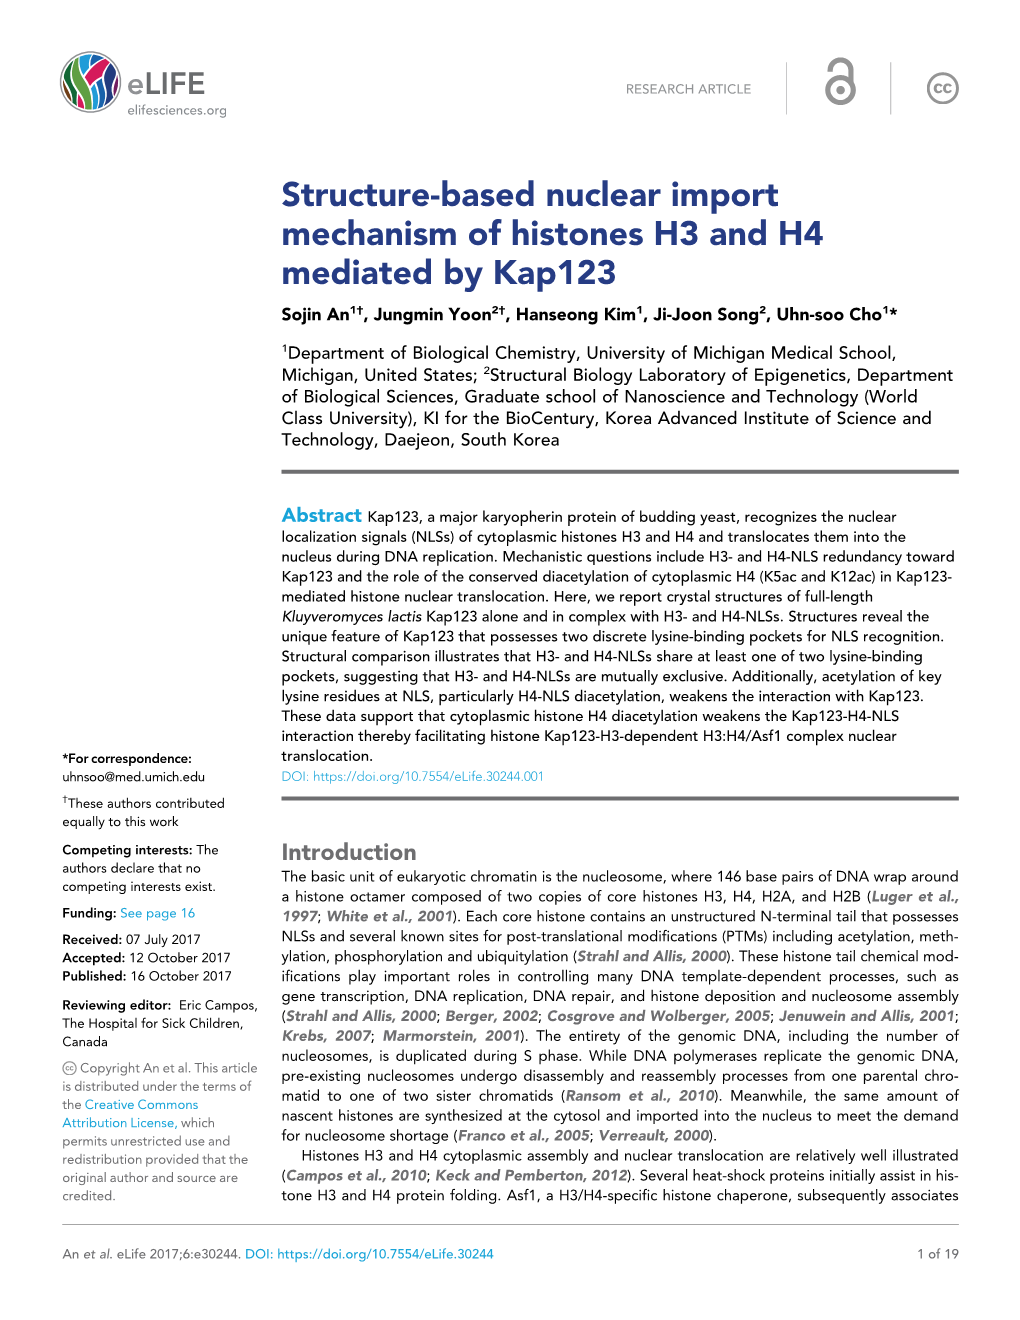 Structure-Based Nuclear Import Mechanism of Histones H3 and H4 Mediated by Kap123 Sojin An1†, Jungmin Yoon2†, Hanseong Kim1, Ji-Joon Song2, Uhn-Soo Cho1*